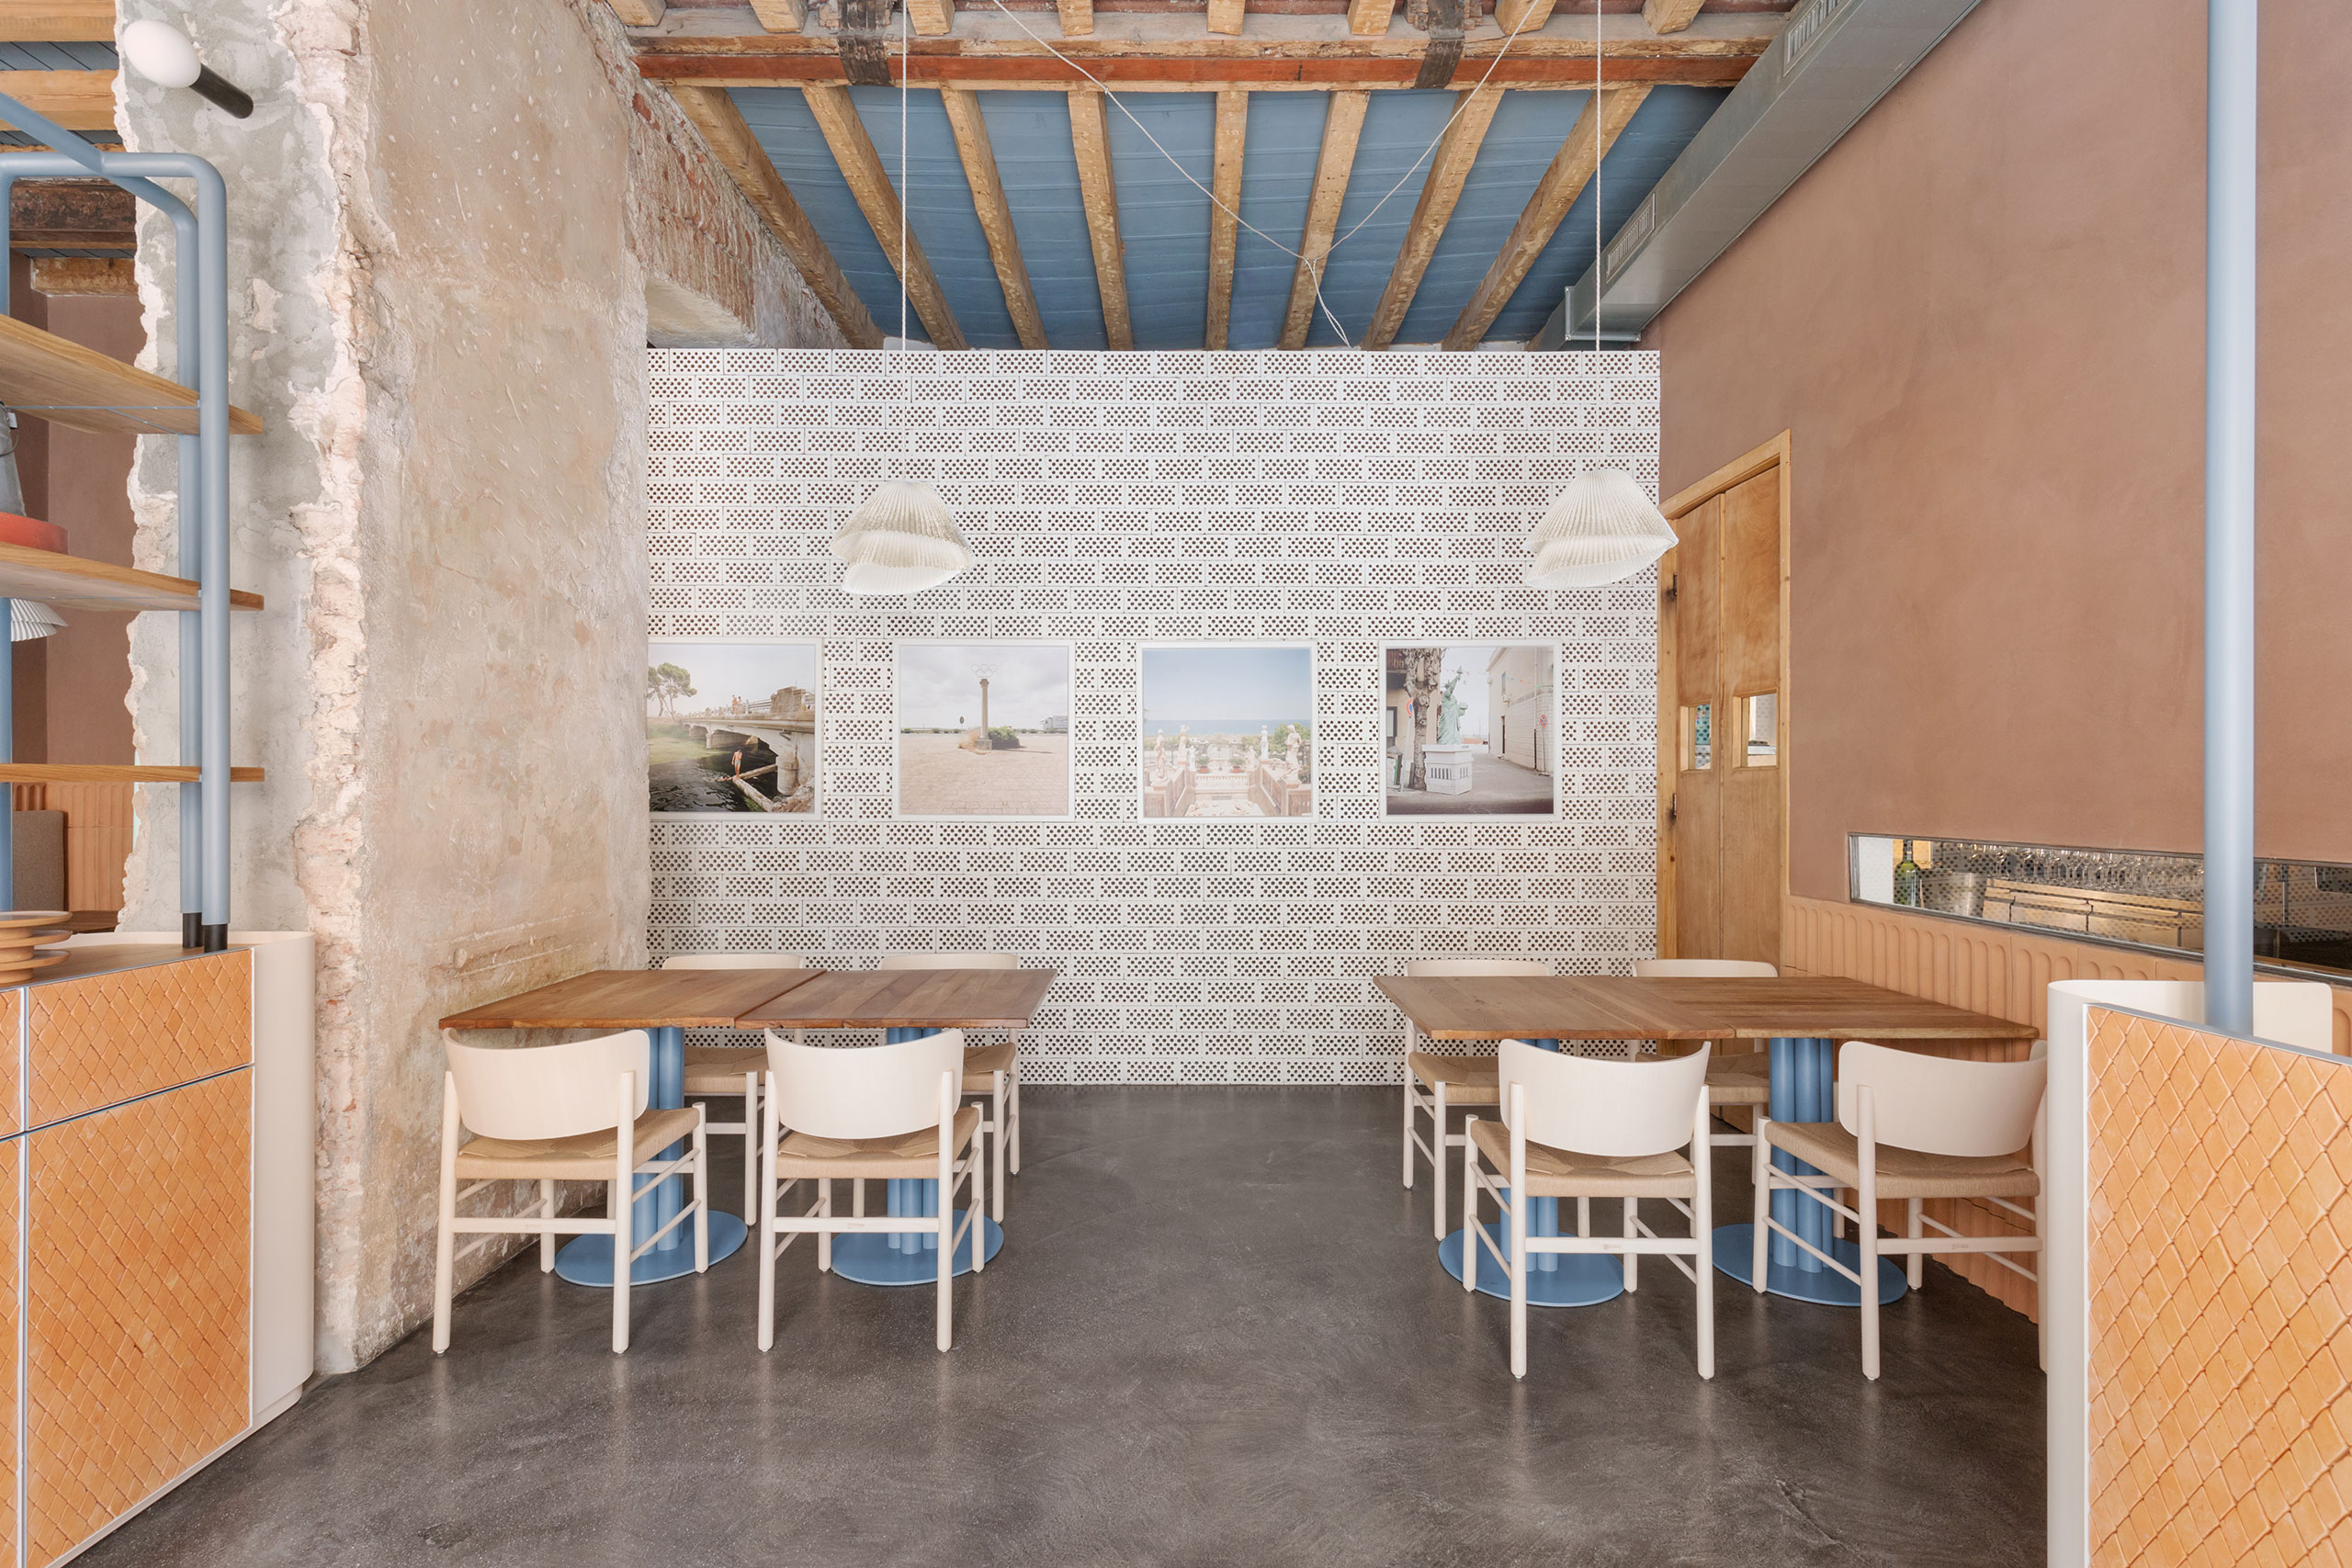 28 Posti restaurant designed by Cristina Celestino. Photo Delfino Sisto Legnani.